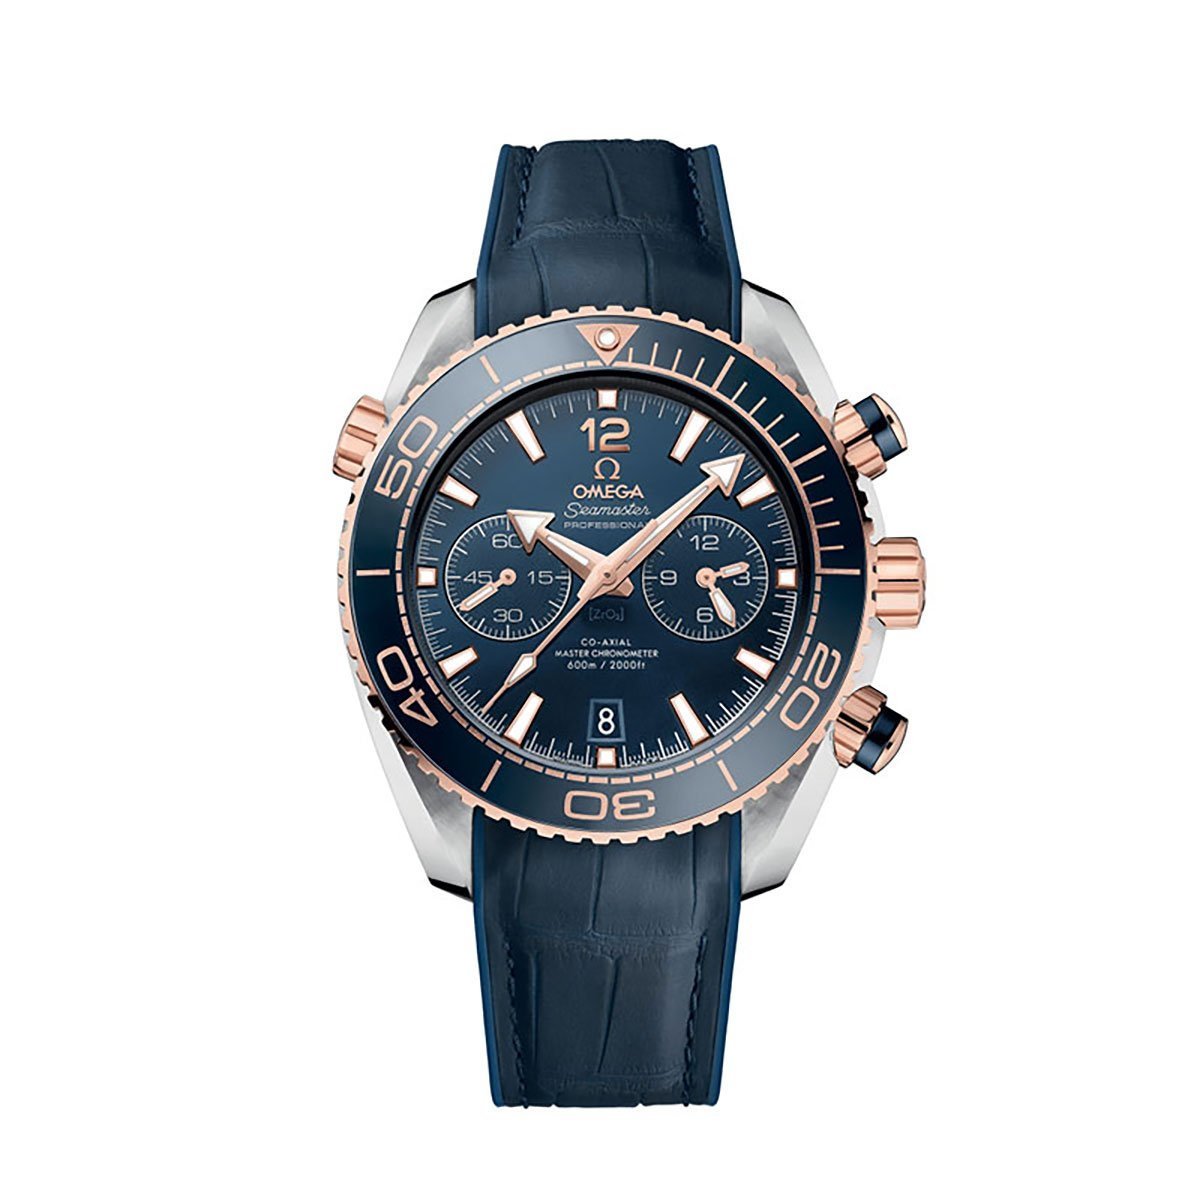 Seamaster Planet Ocean 600M Chronograph 45.5mm Watch